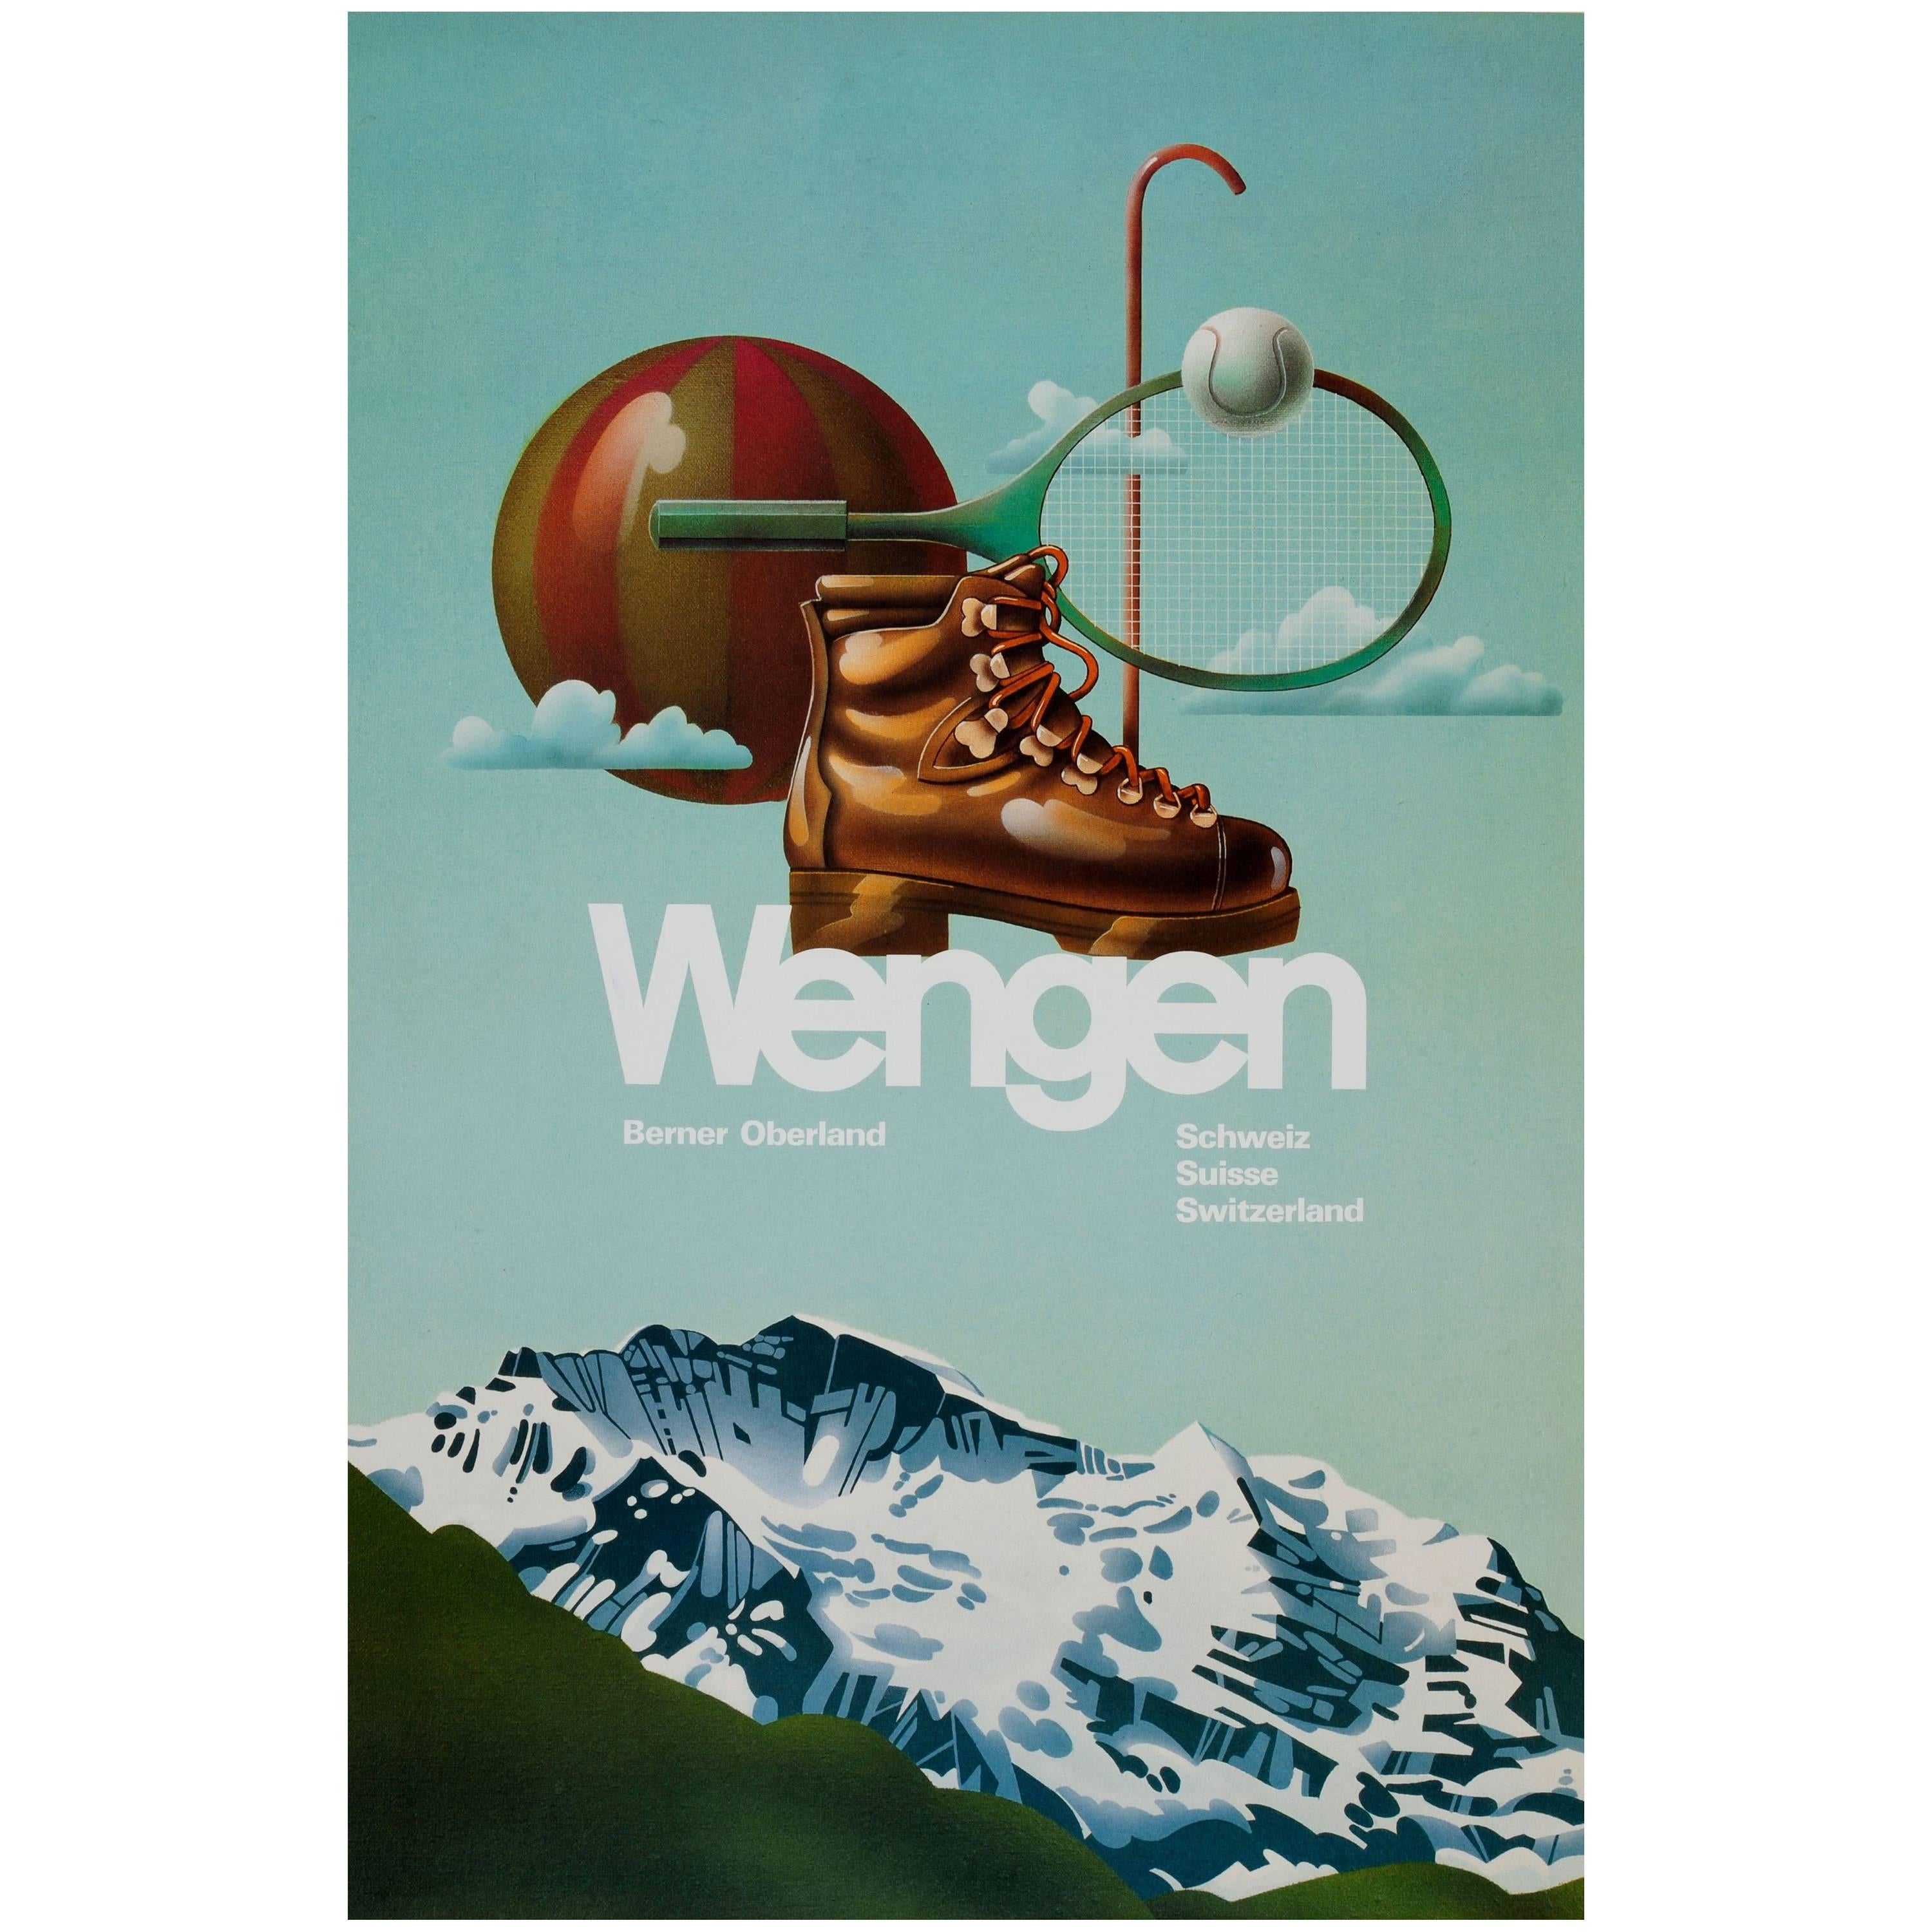 Original Vintage Summer and Winter Sport Travel Poster for Wengen in Switzerland